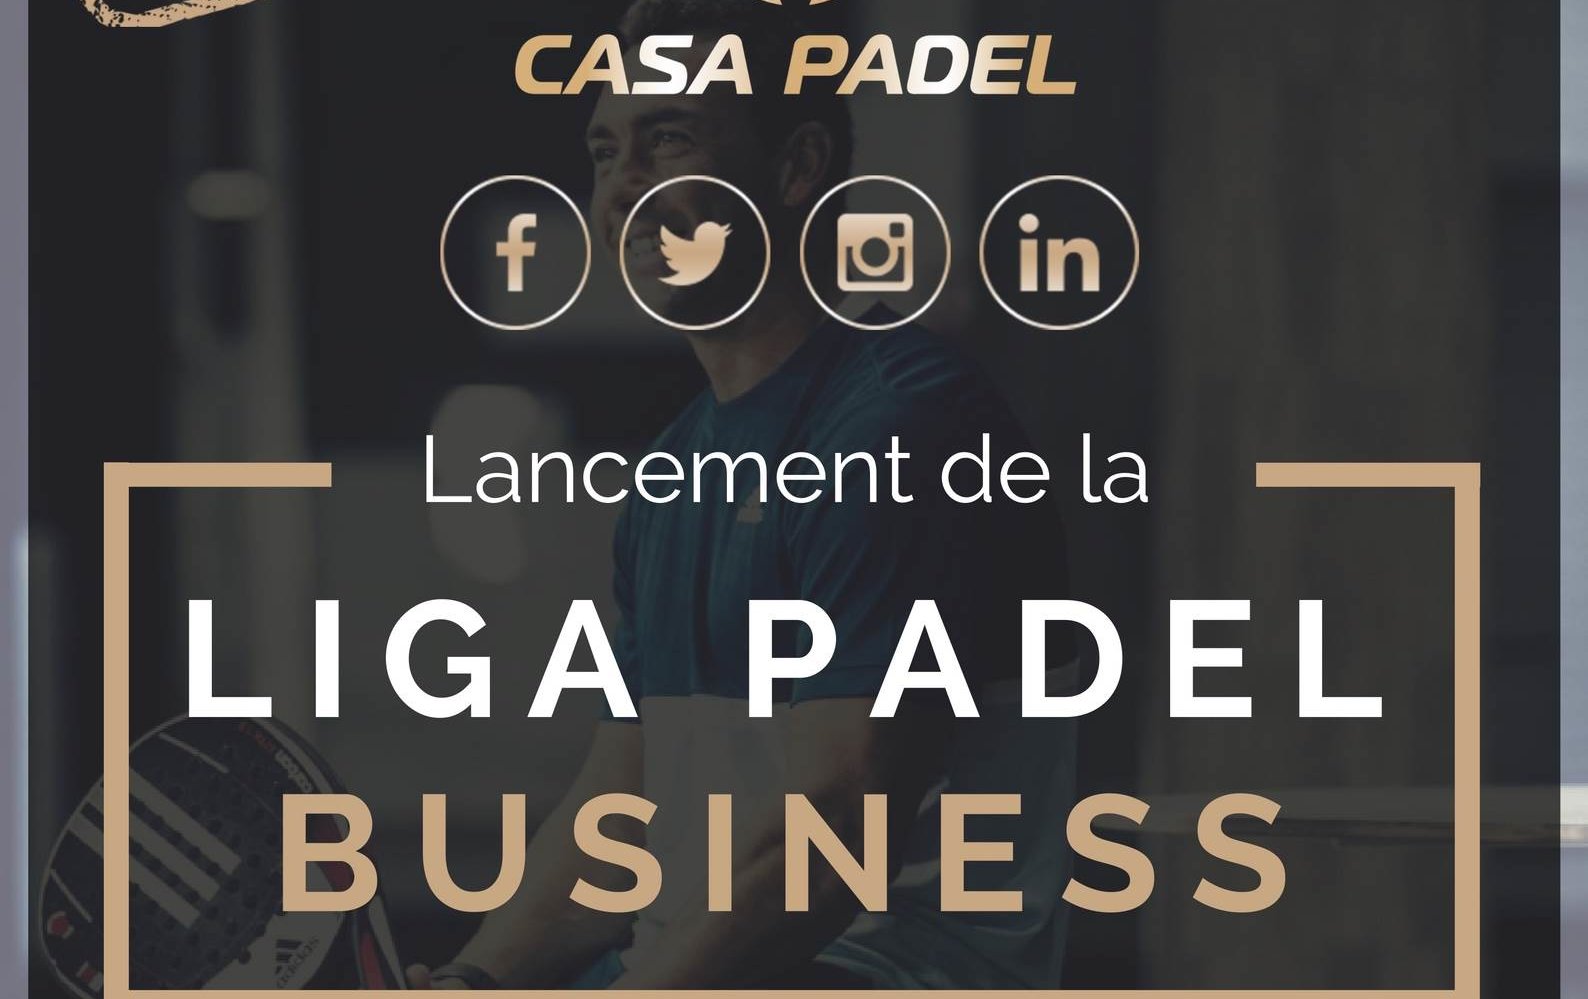 Casa Padel lance la LIGA PADEL BUSINESS